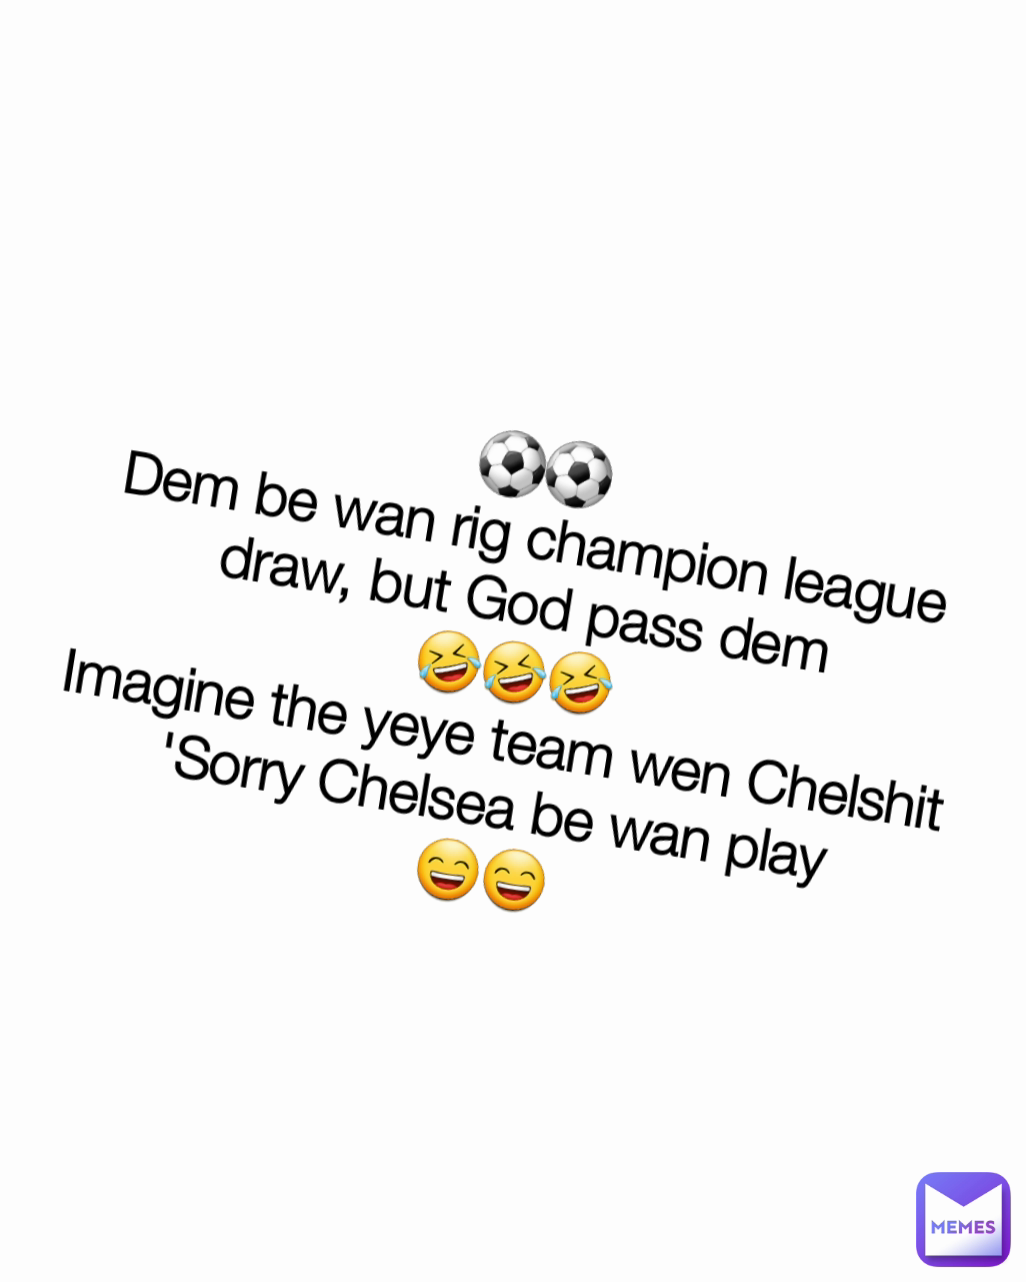 ⚽️⚽️
Dem be wan rig champion league draw, but God pass dem
🤣🤣🤣
Imagine the yeye team wen Chelshit 'Sorry Chelsea be wan play
😄😄